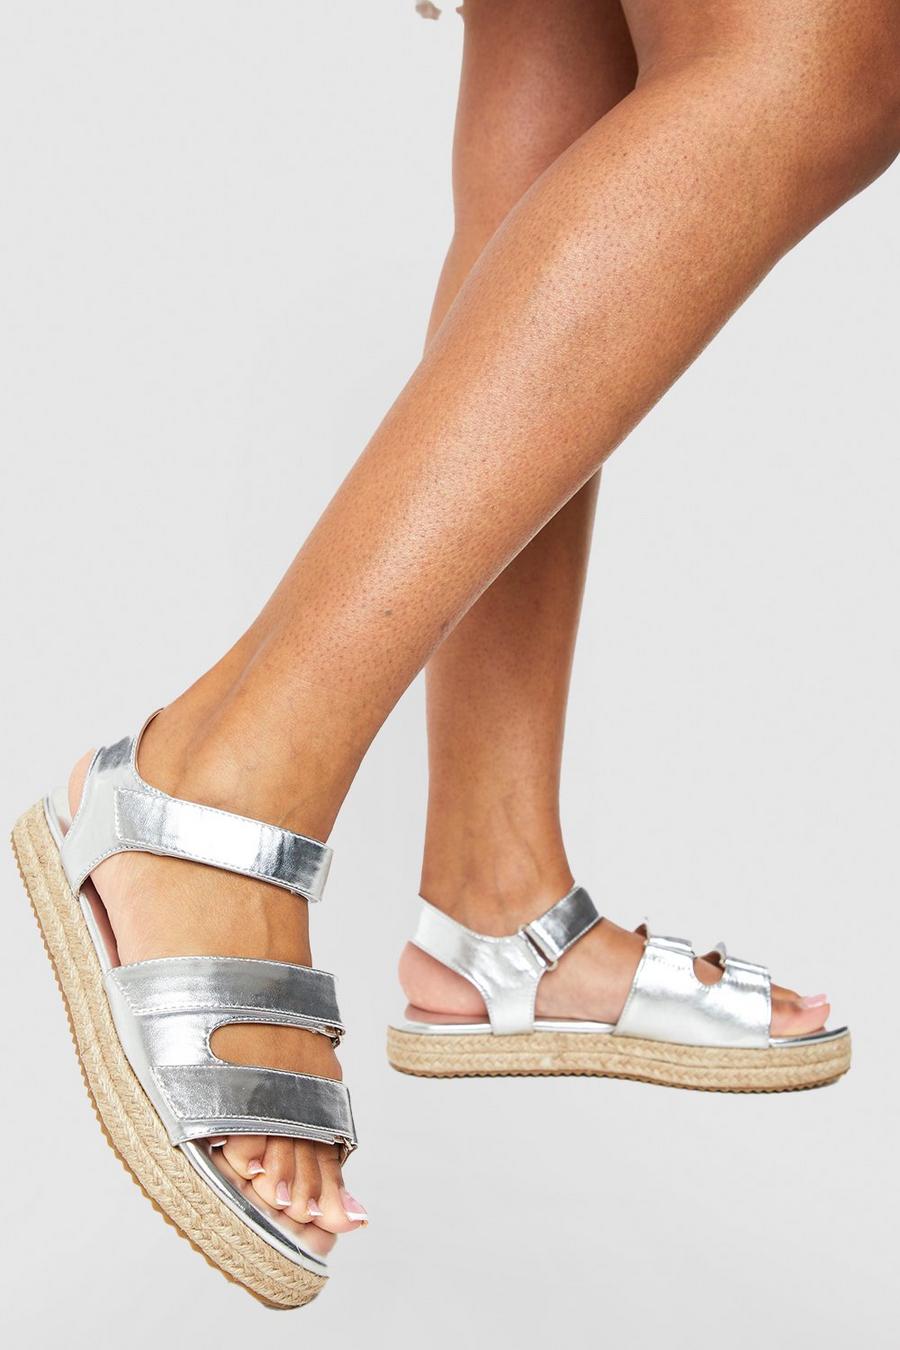 Sandali flatform a calzata ampia metallizzati, Silver